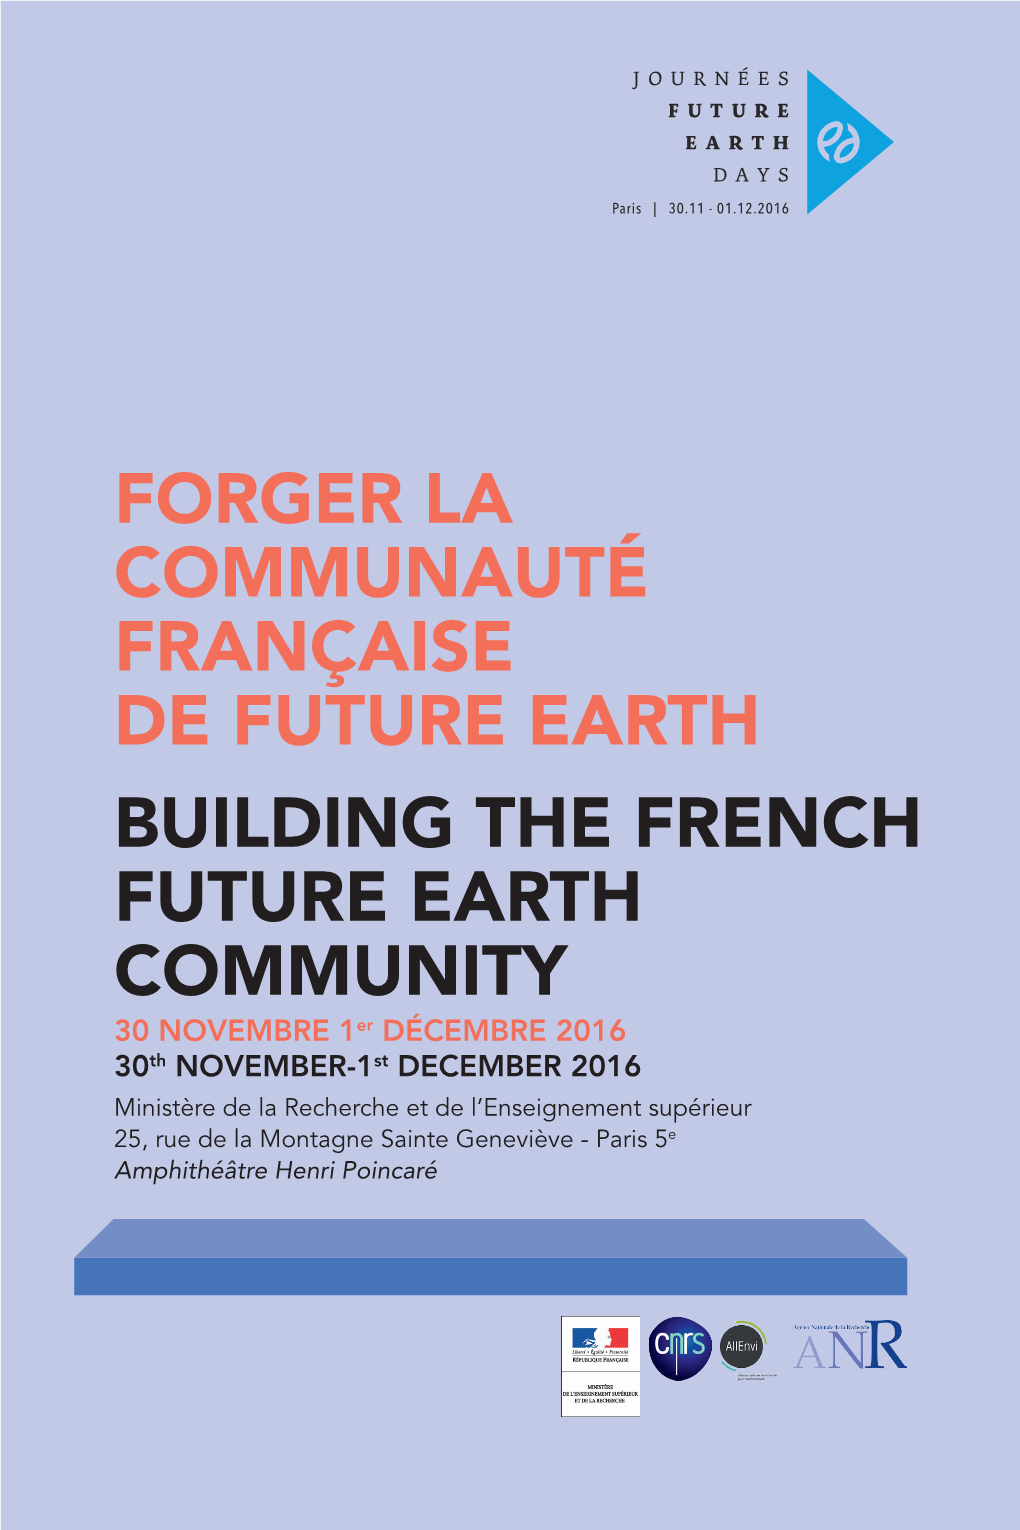 Forger La Communauté Française De Future Earth Building the French Future Earth Community